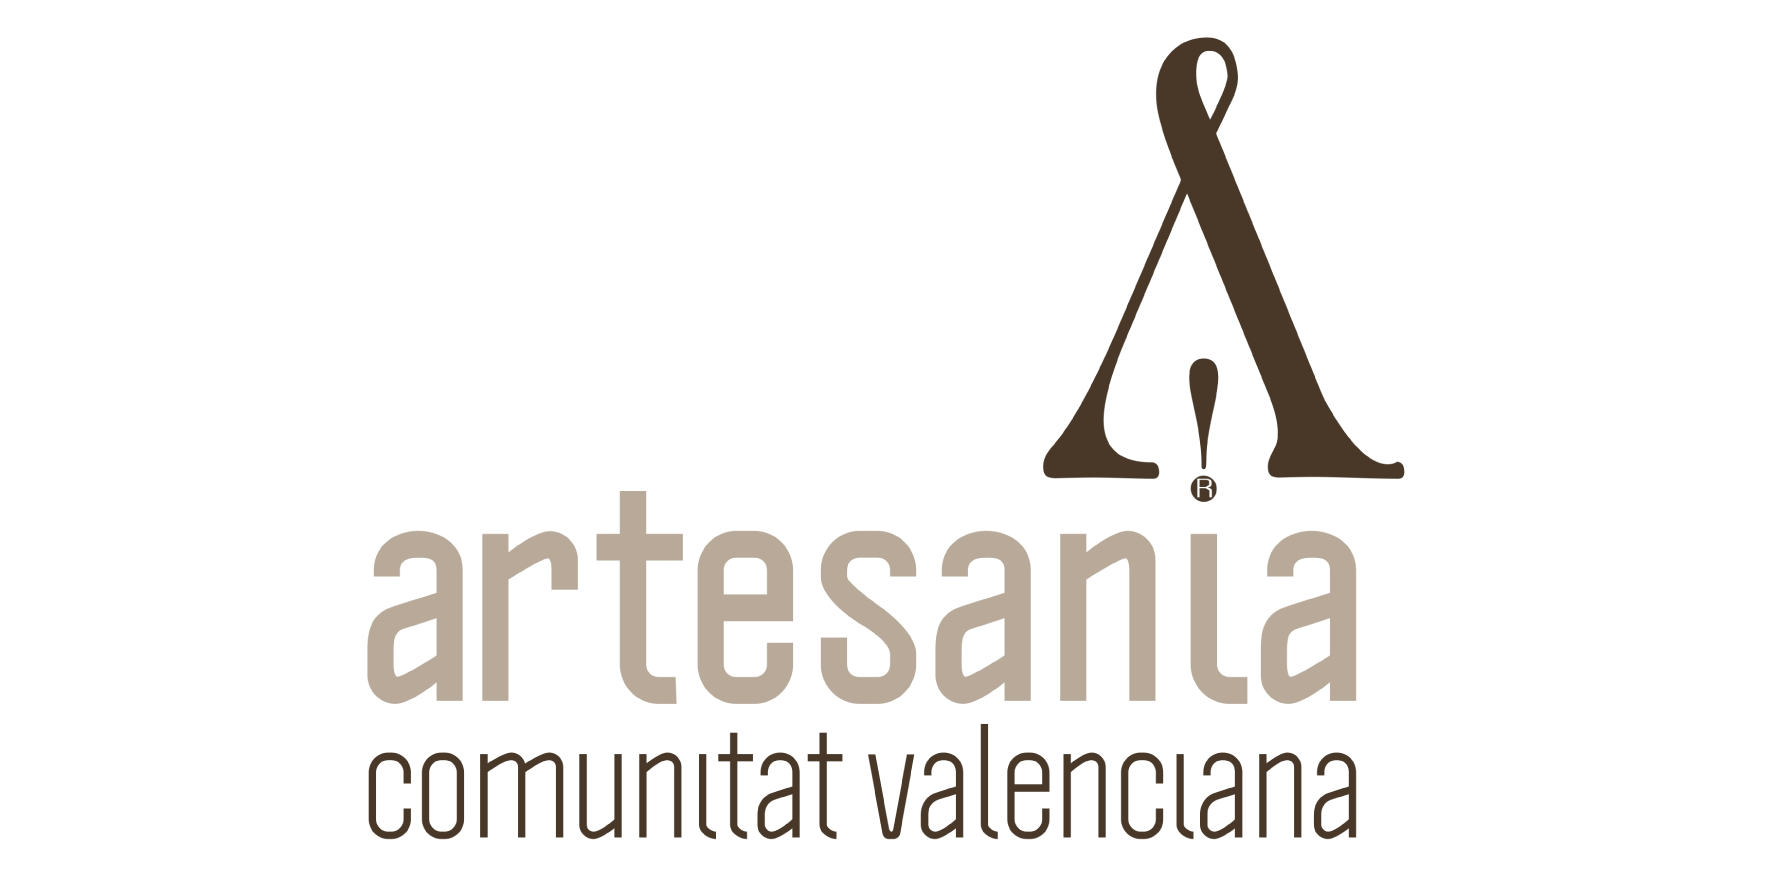 Centro de Artesania Comunitat Valenciana